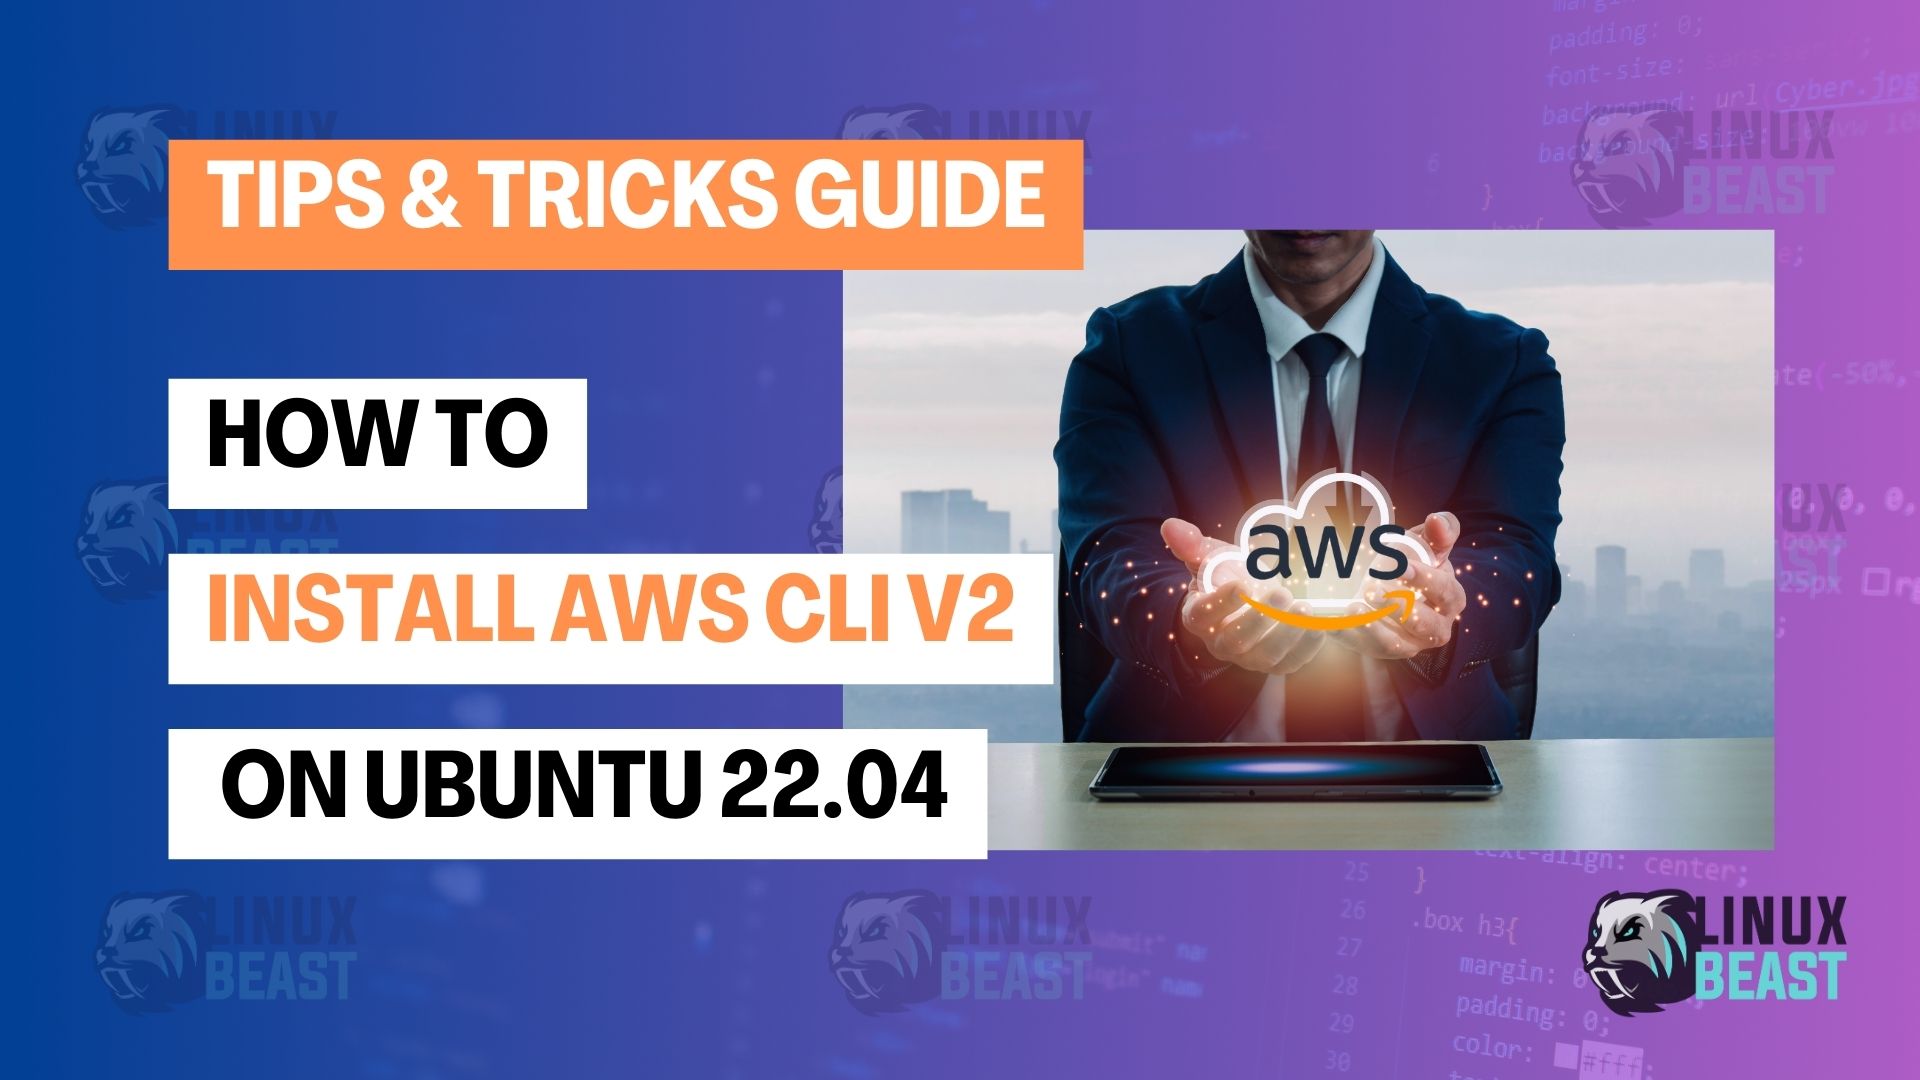 How to Install AWS CLI v2 on Ubuntu 22.04